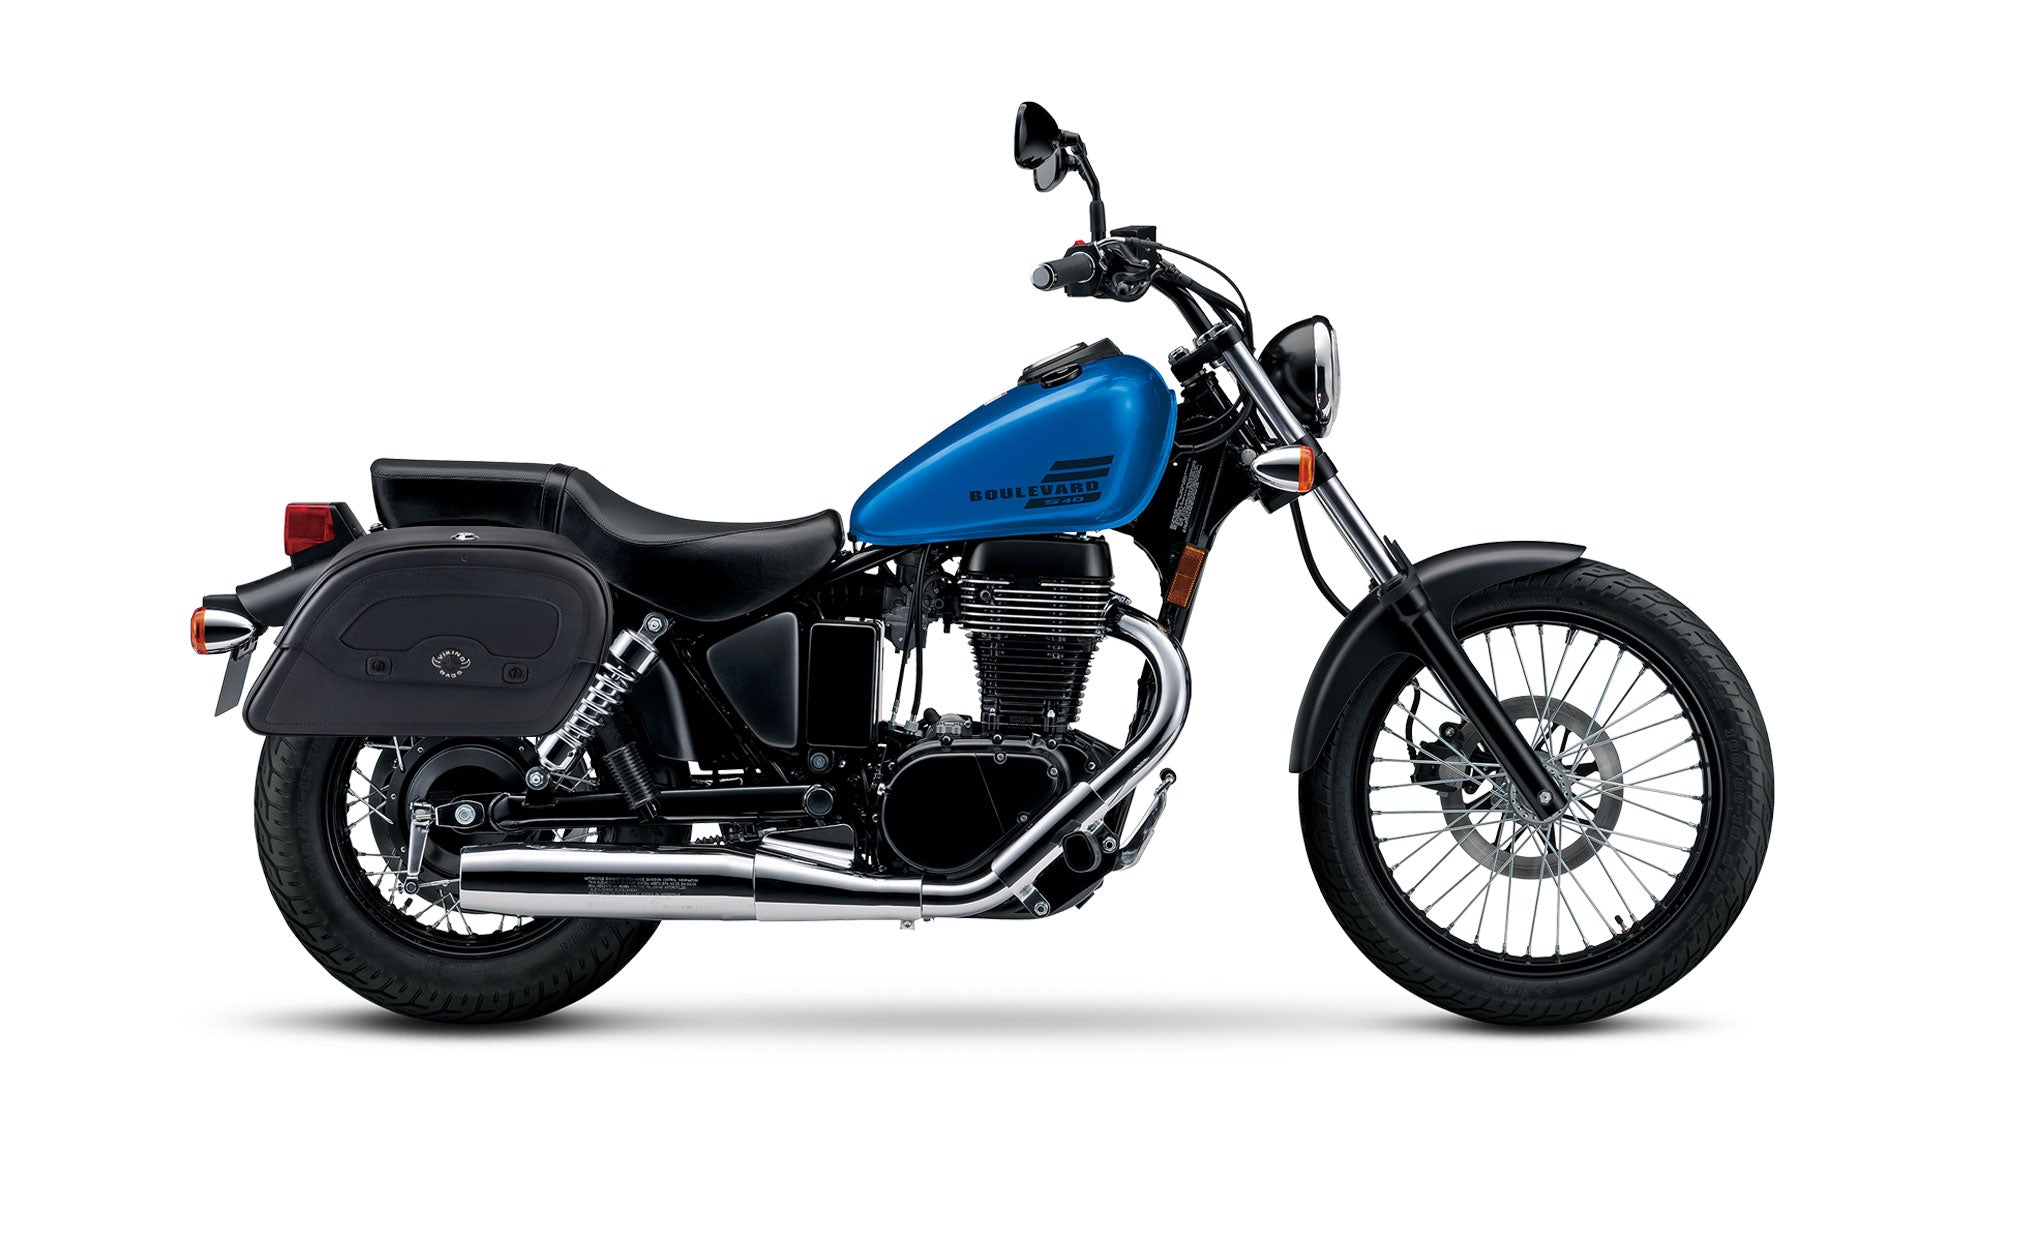 Viking Warrior Medium Suzuki Boulevard S40 Savage Ls650 Leather Motorcycle Saddlebags on Bike Photo @expand